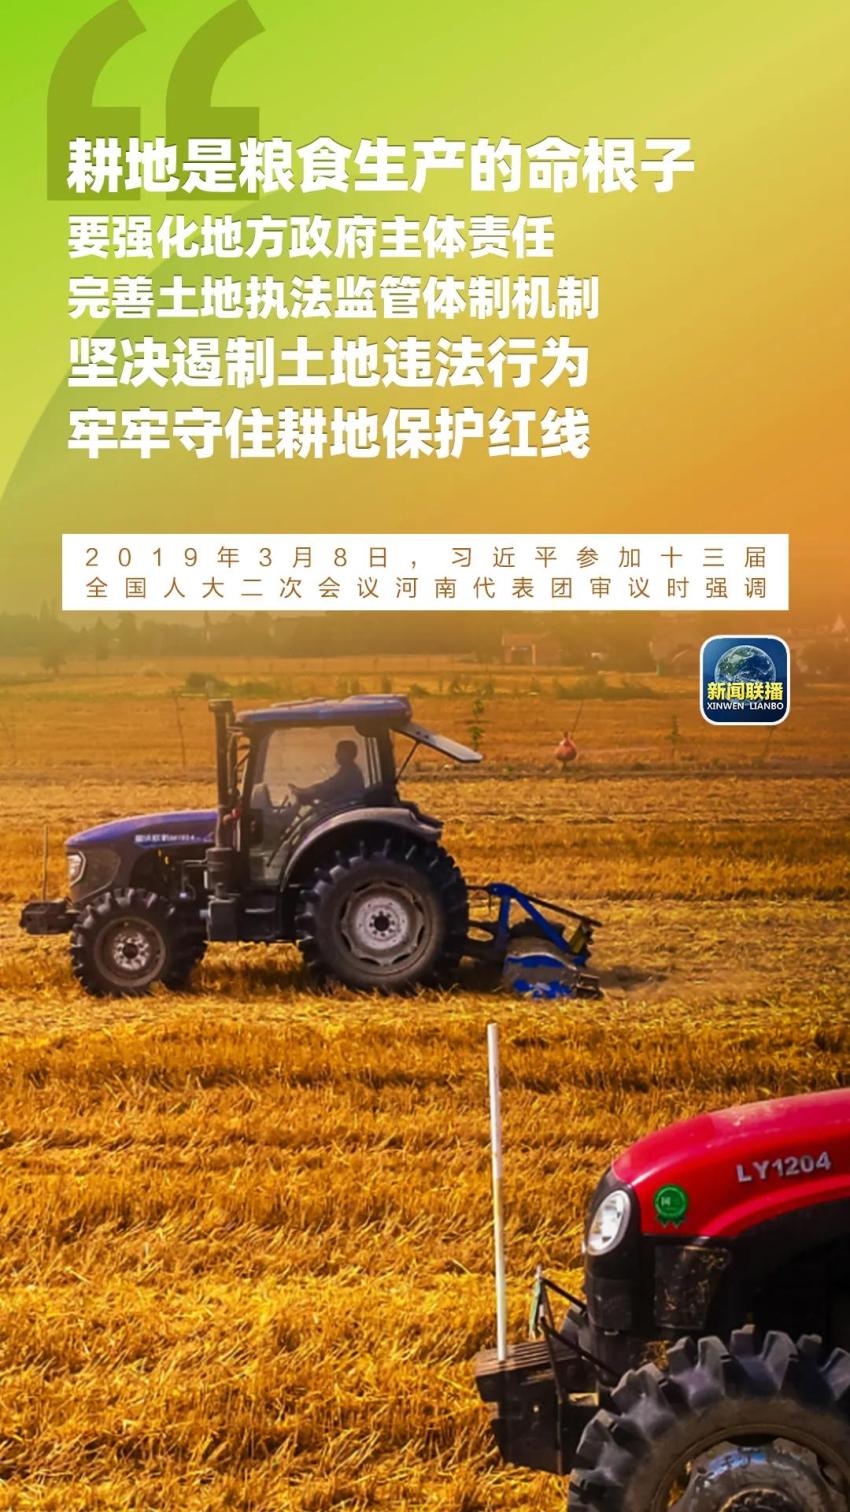 Presiden Xi Jinping Perhatikan Masalah Pedesaan